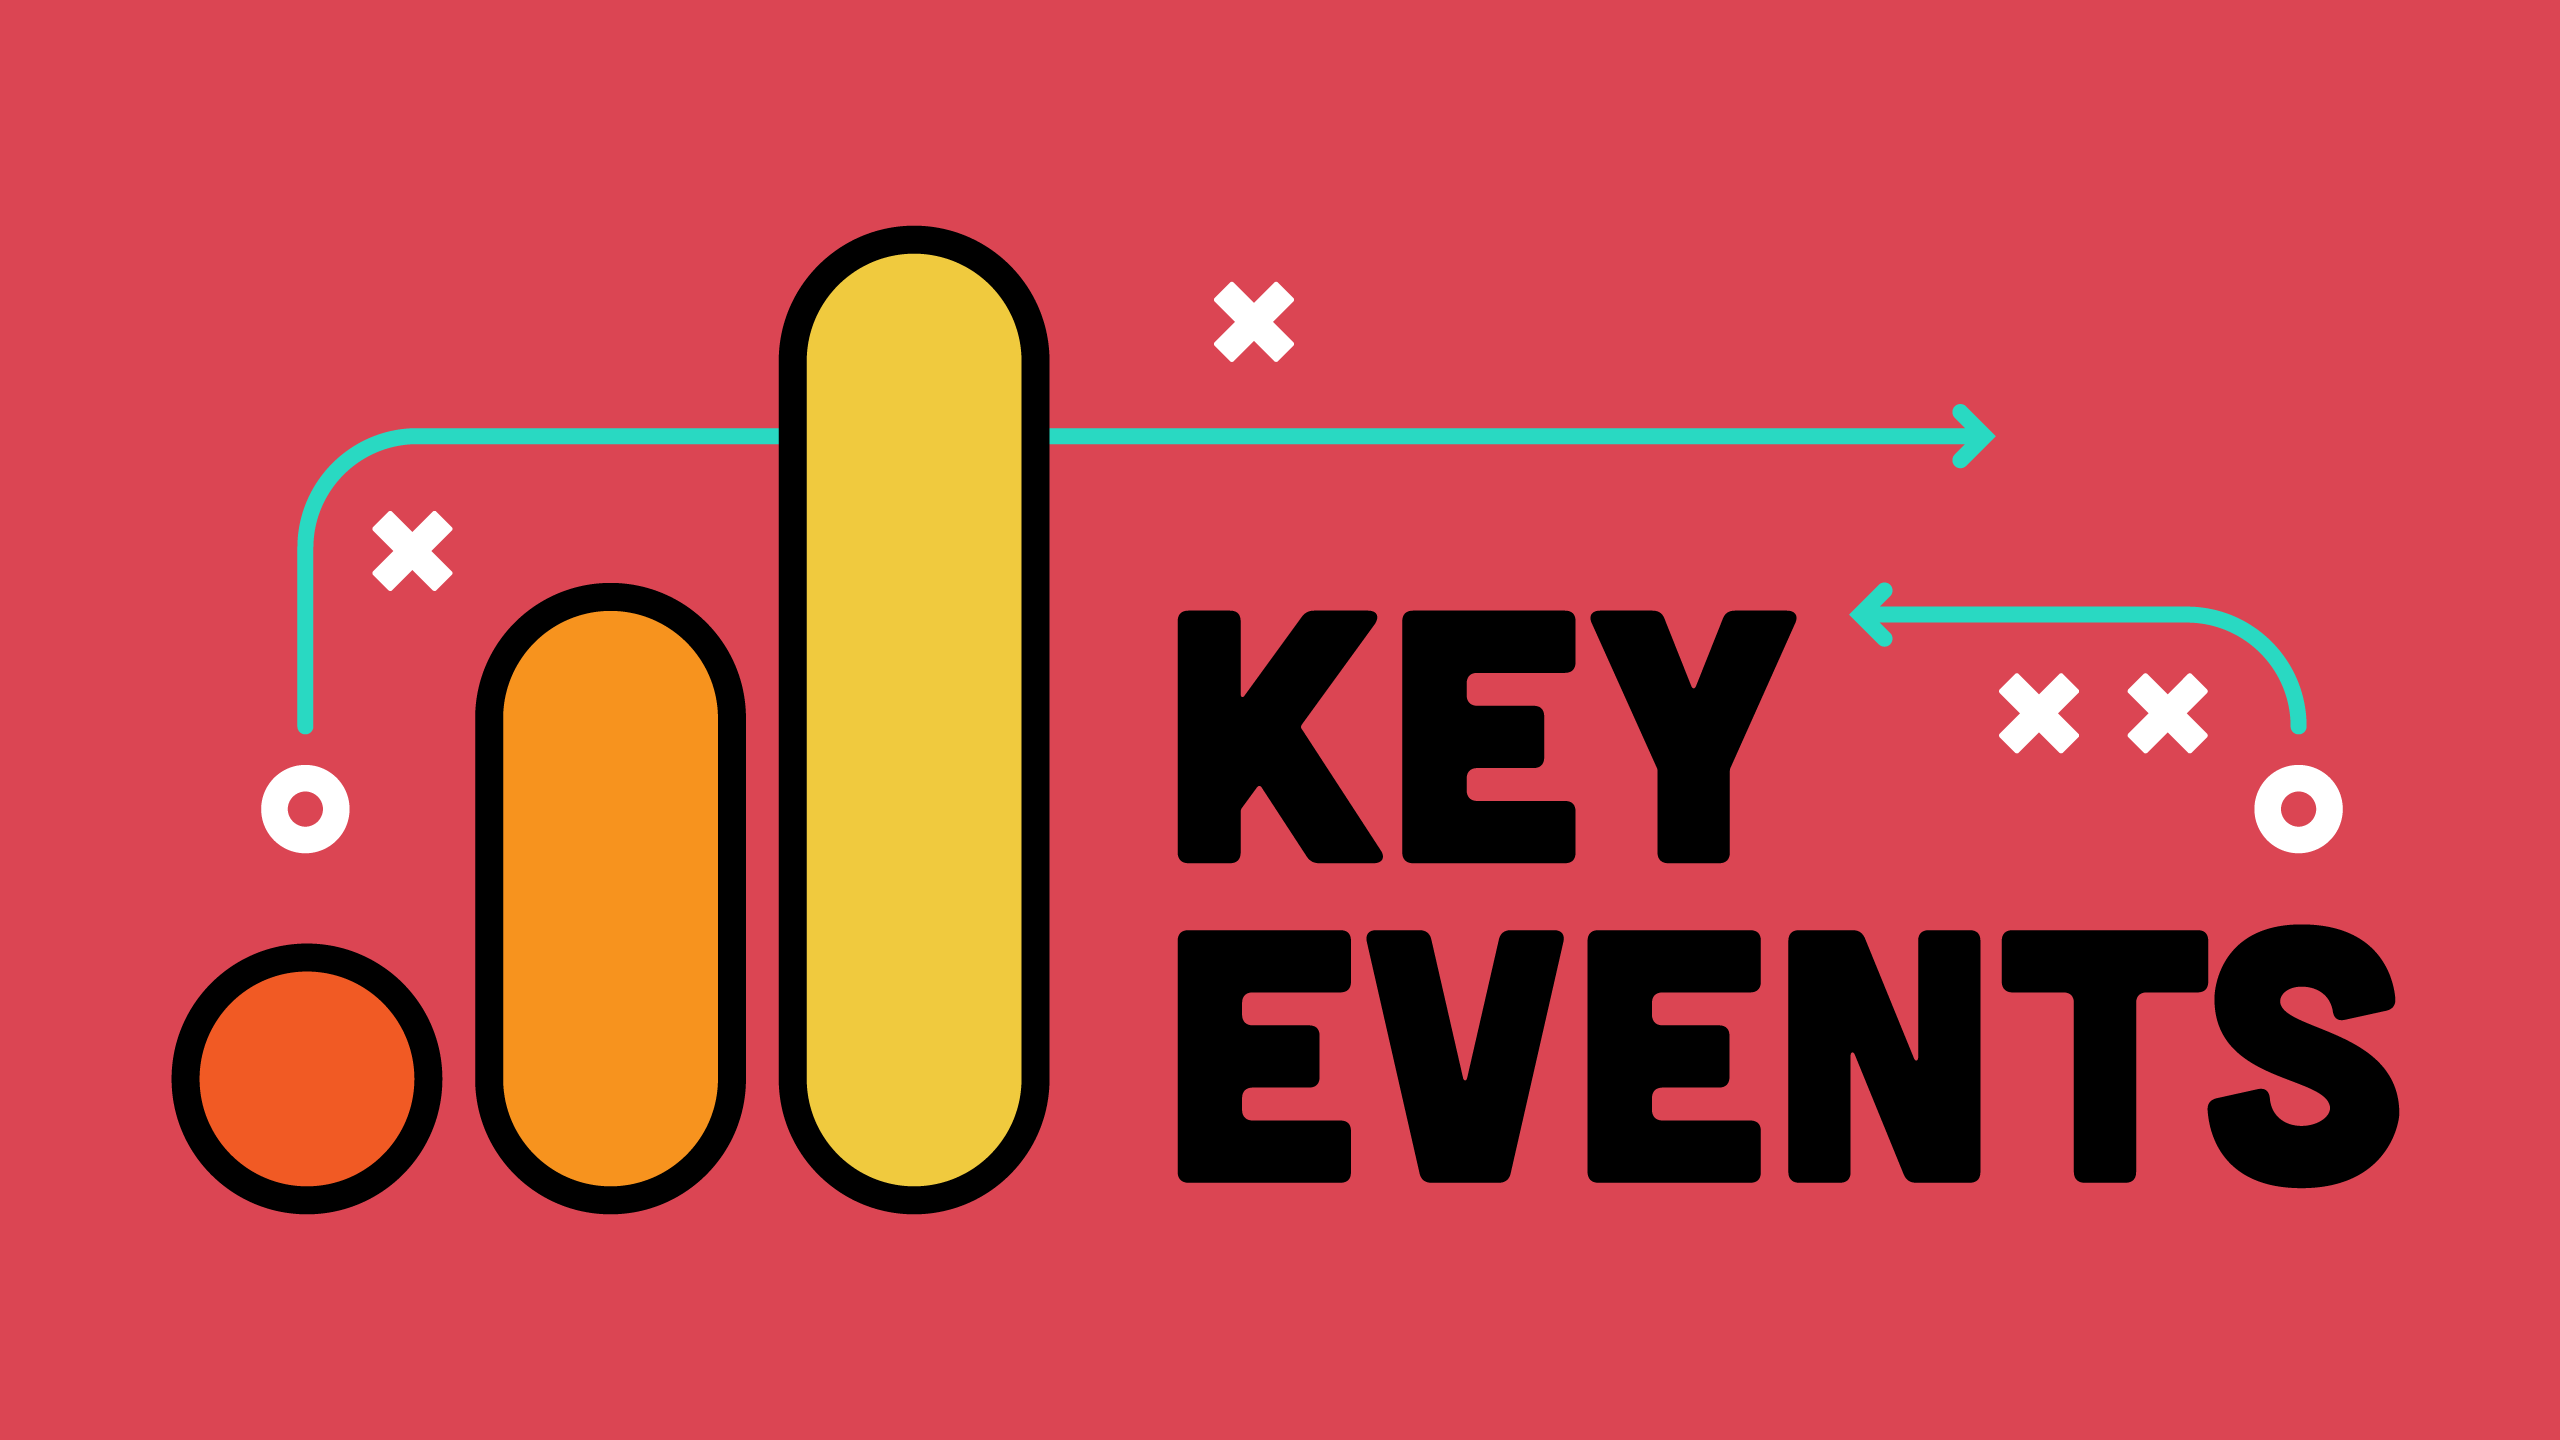 GA4 logo + key events text